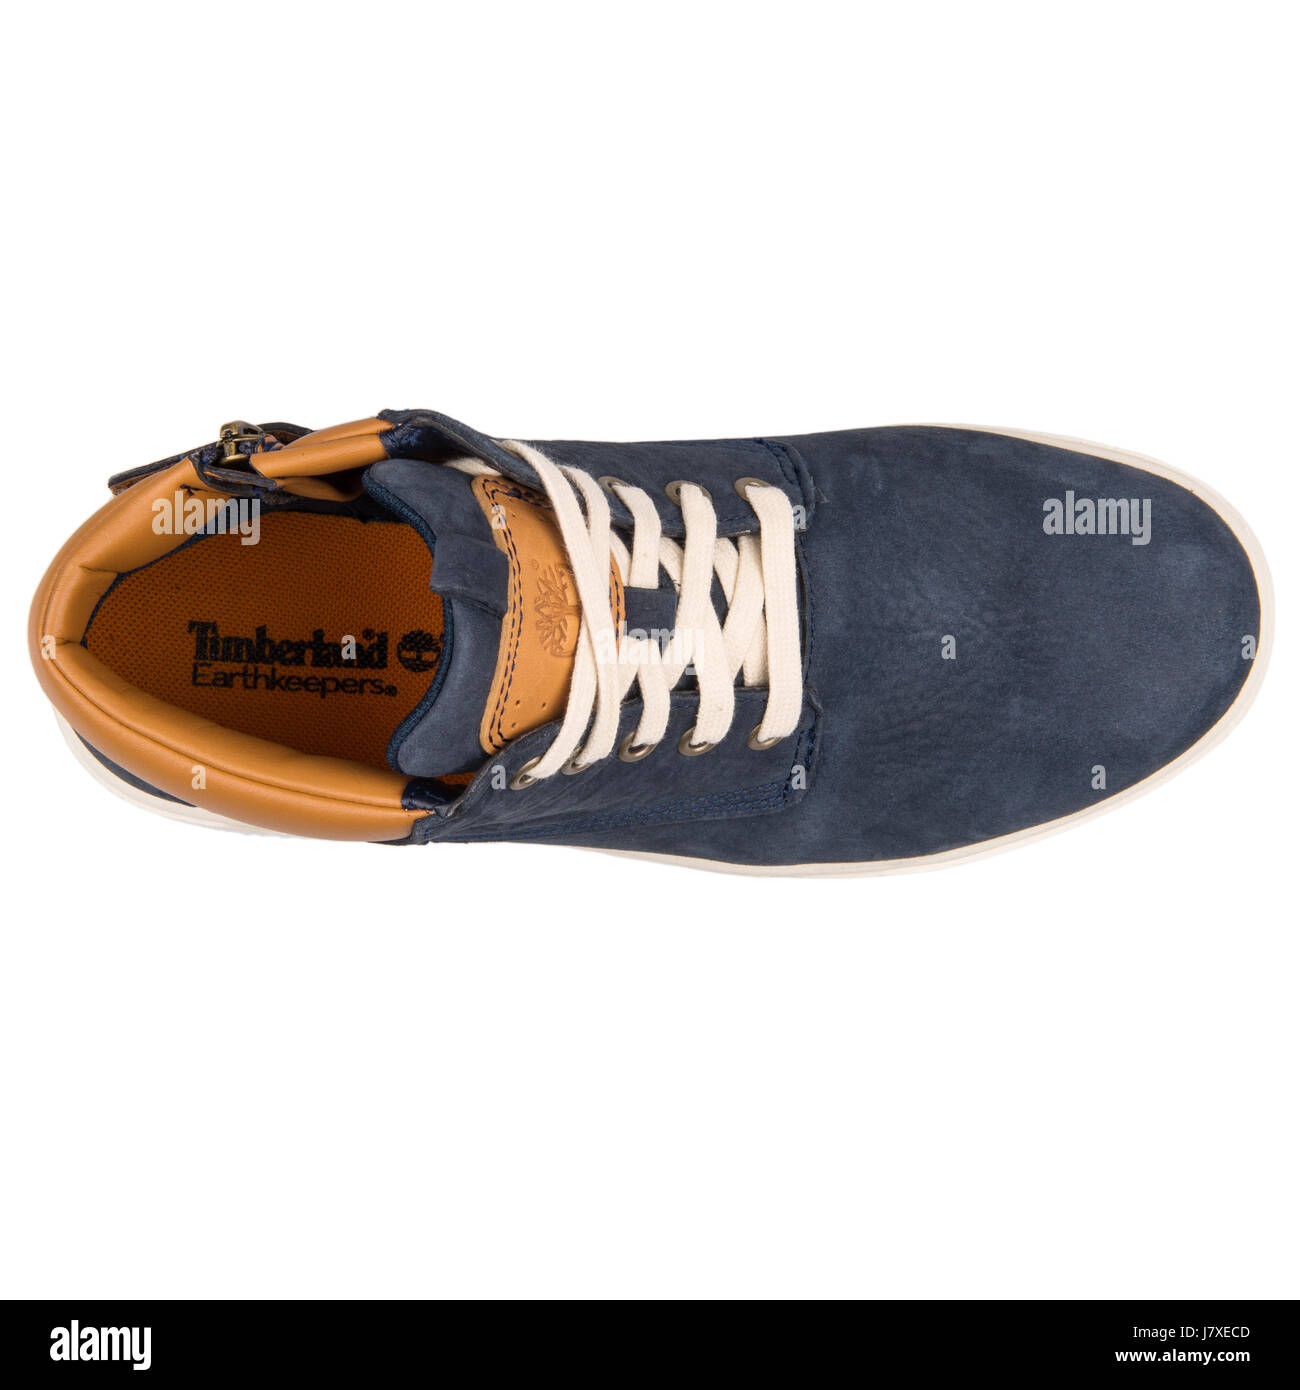 Timberland Earthkeepers EK Groveton Leather Chukka Junior's Navy Blue Shoes  - 6093B Stock Photo - Alamy